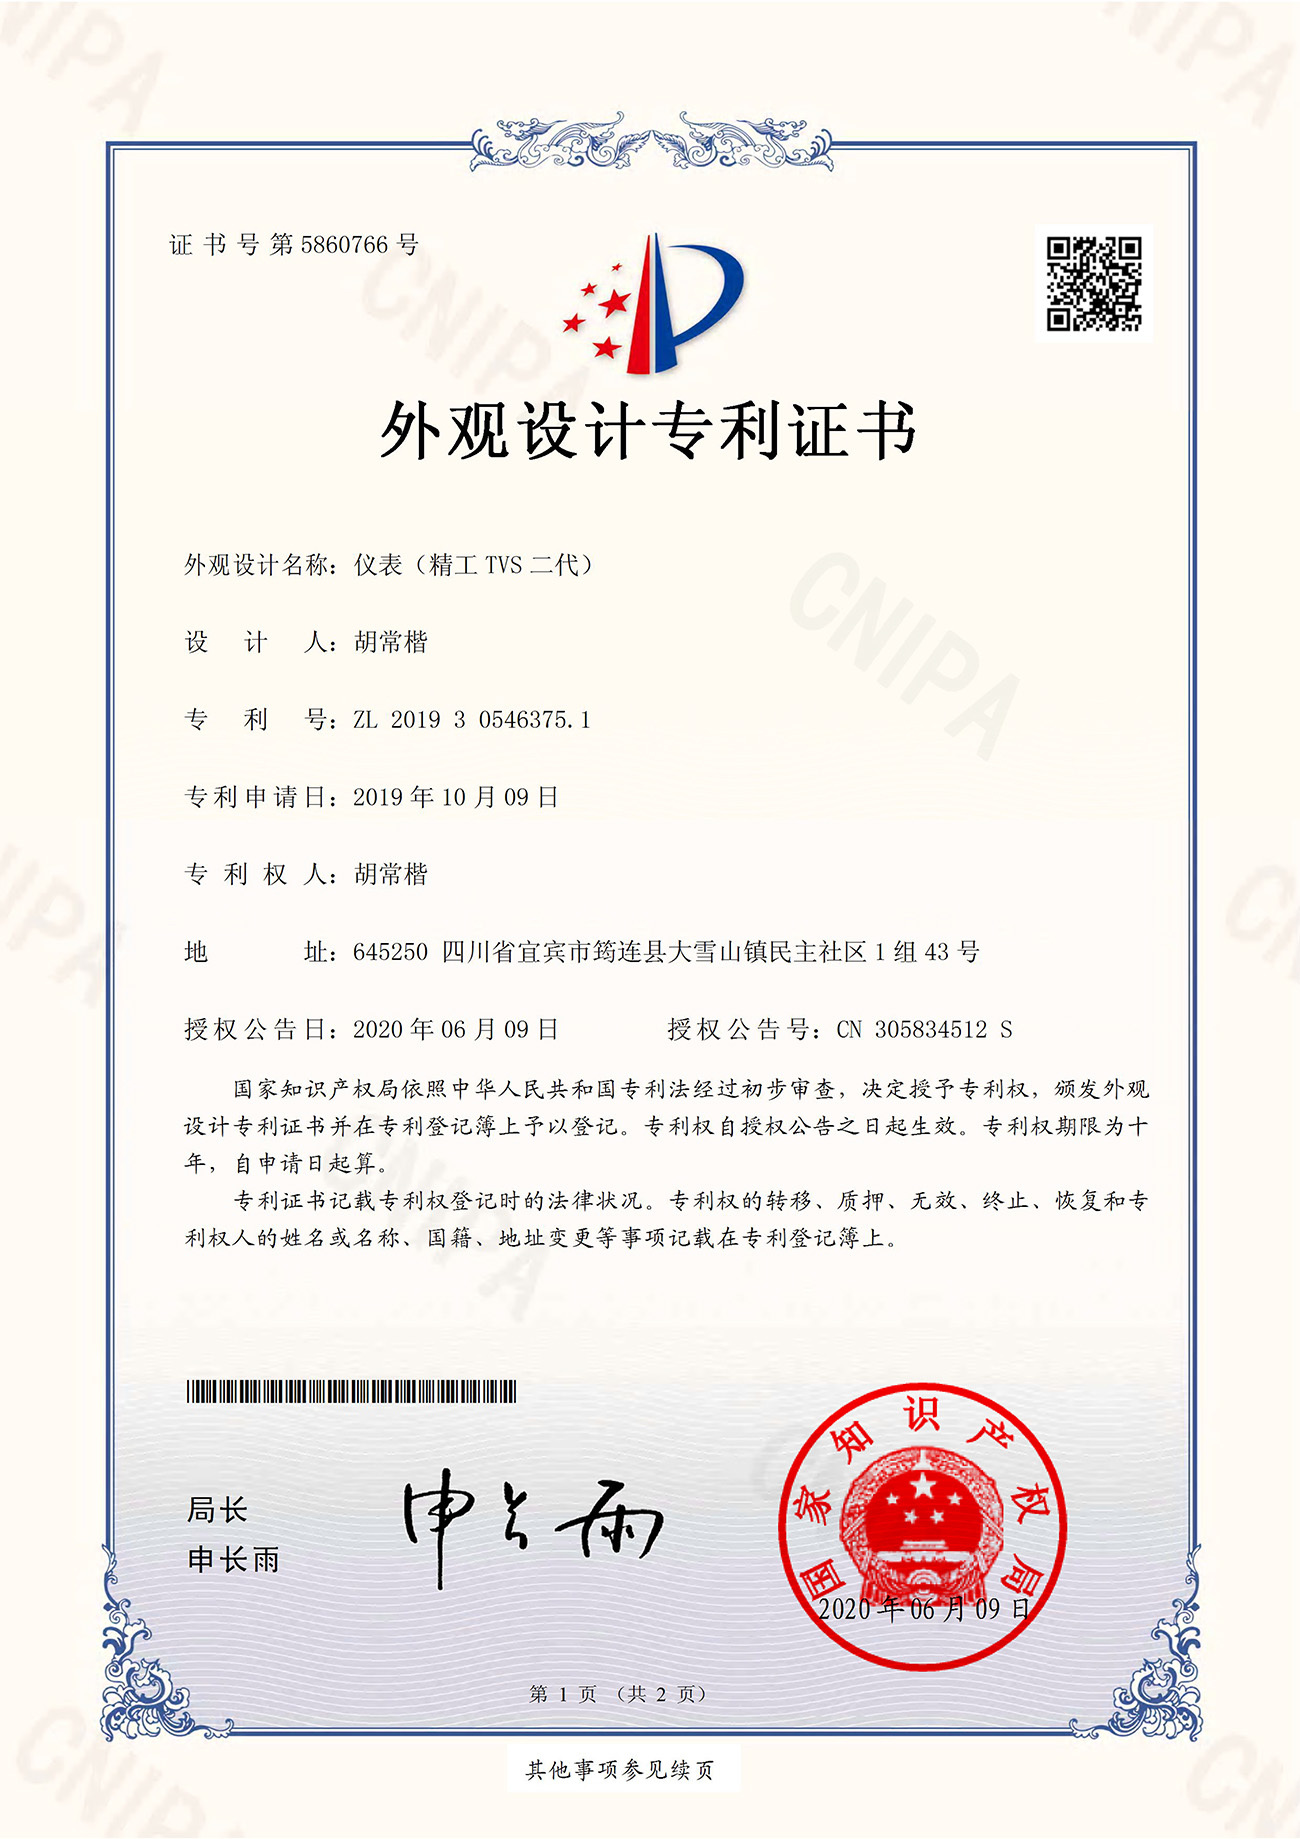 Certificate Hu Changkai Instrument (Seiko TVS II)